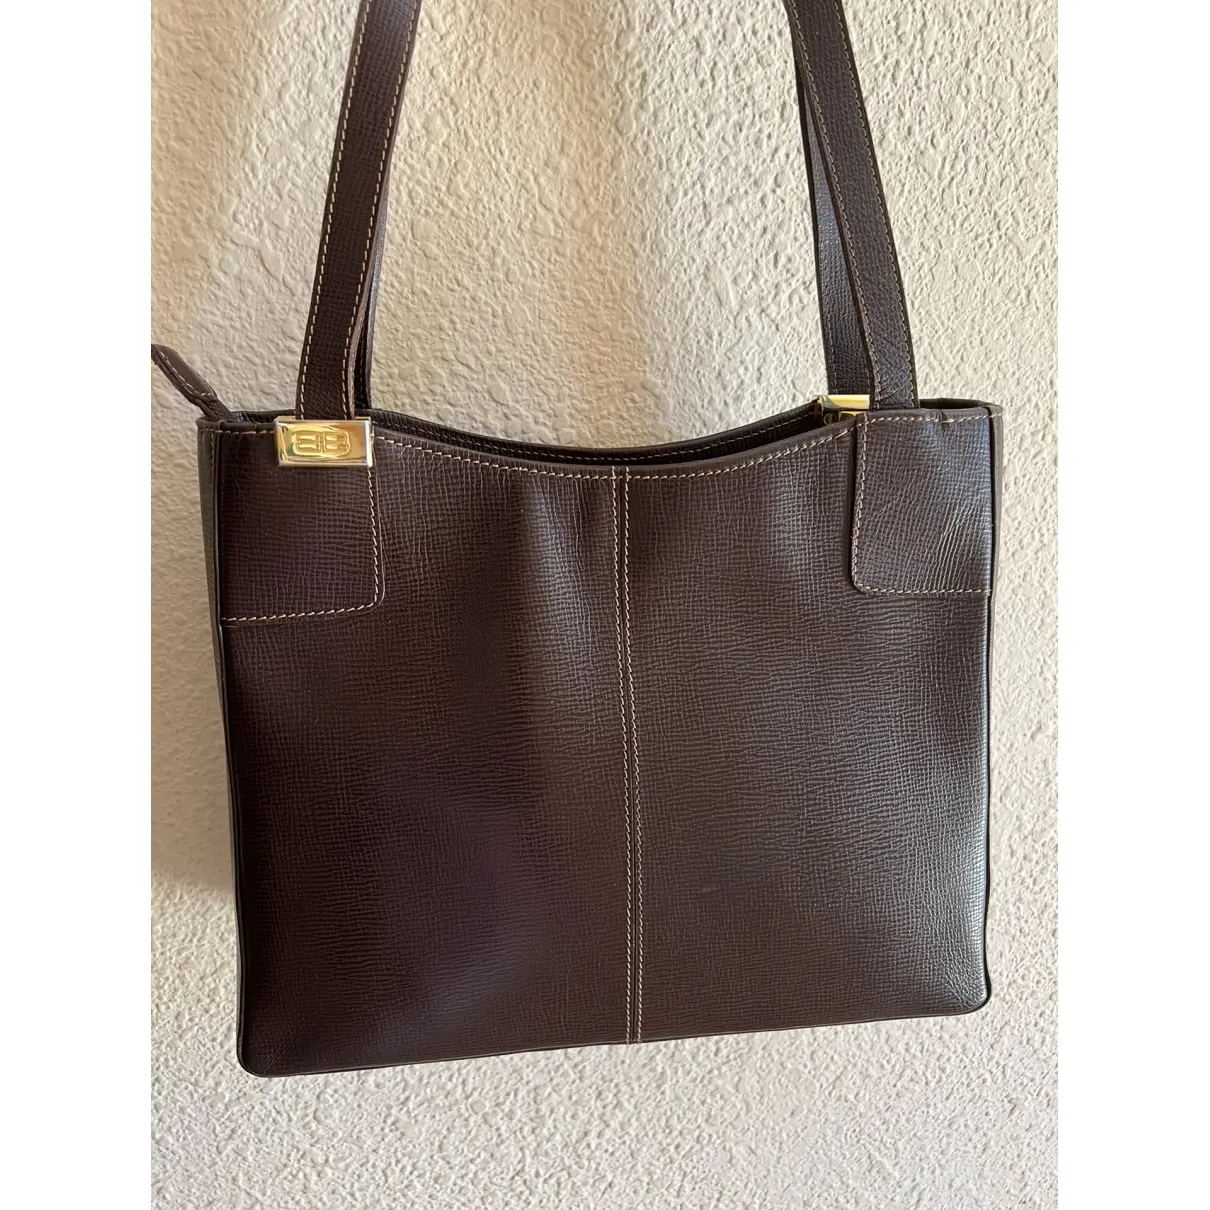 Cable leather handbag Balenciaga - Vintage